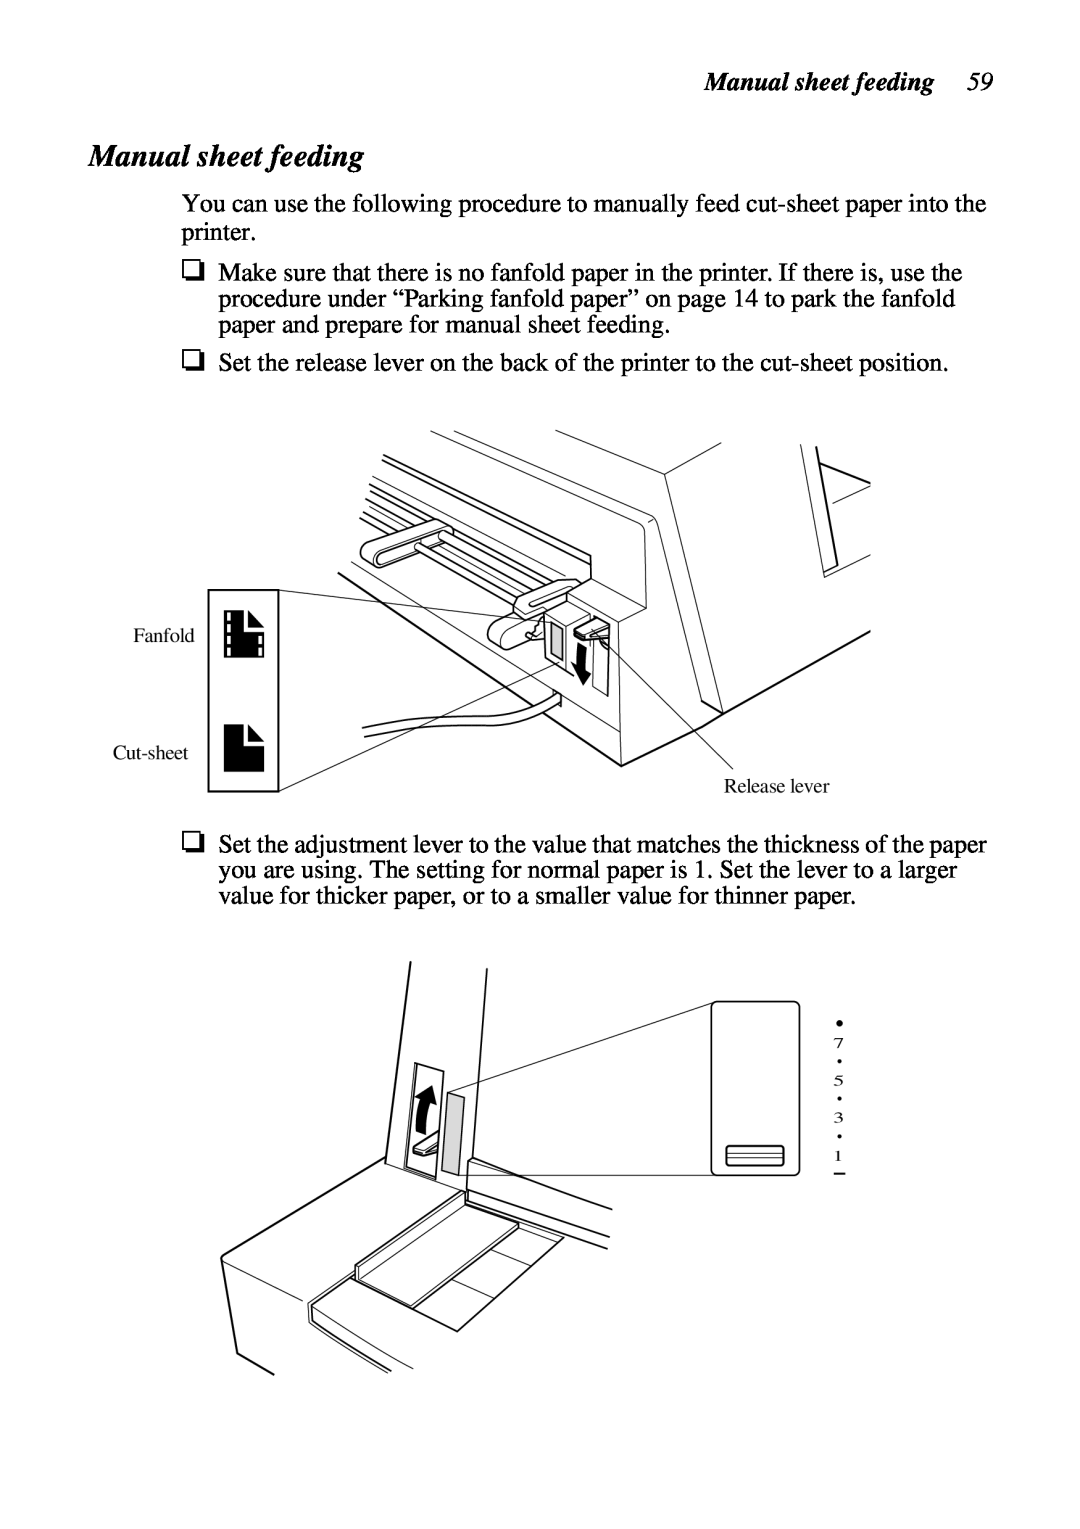 Star Micronics LC-7211 user manual Manual sheet feeding 